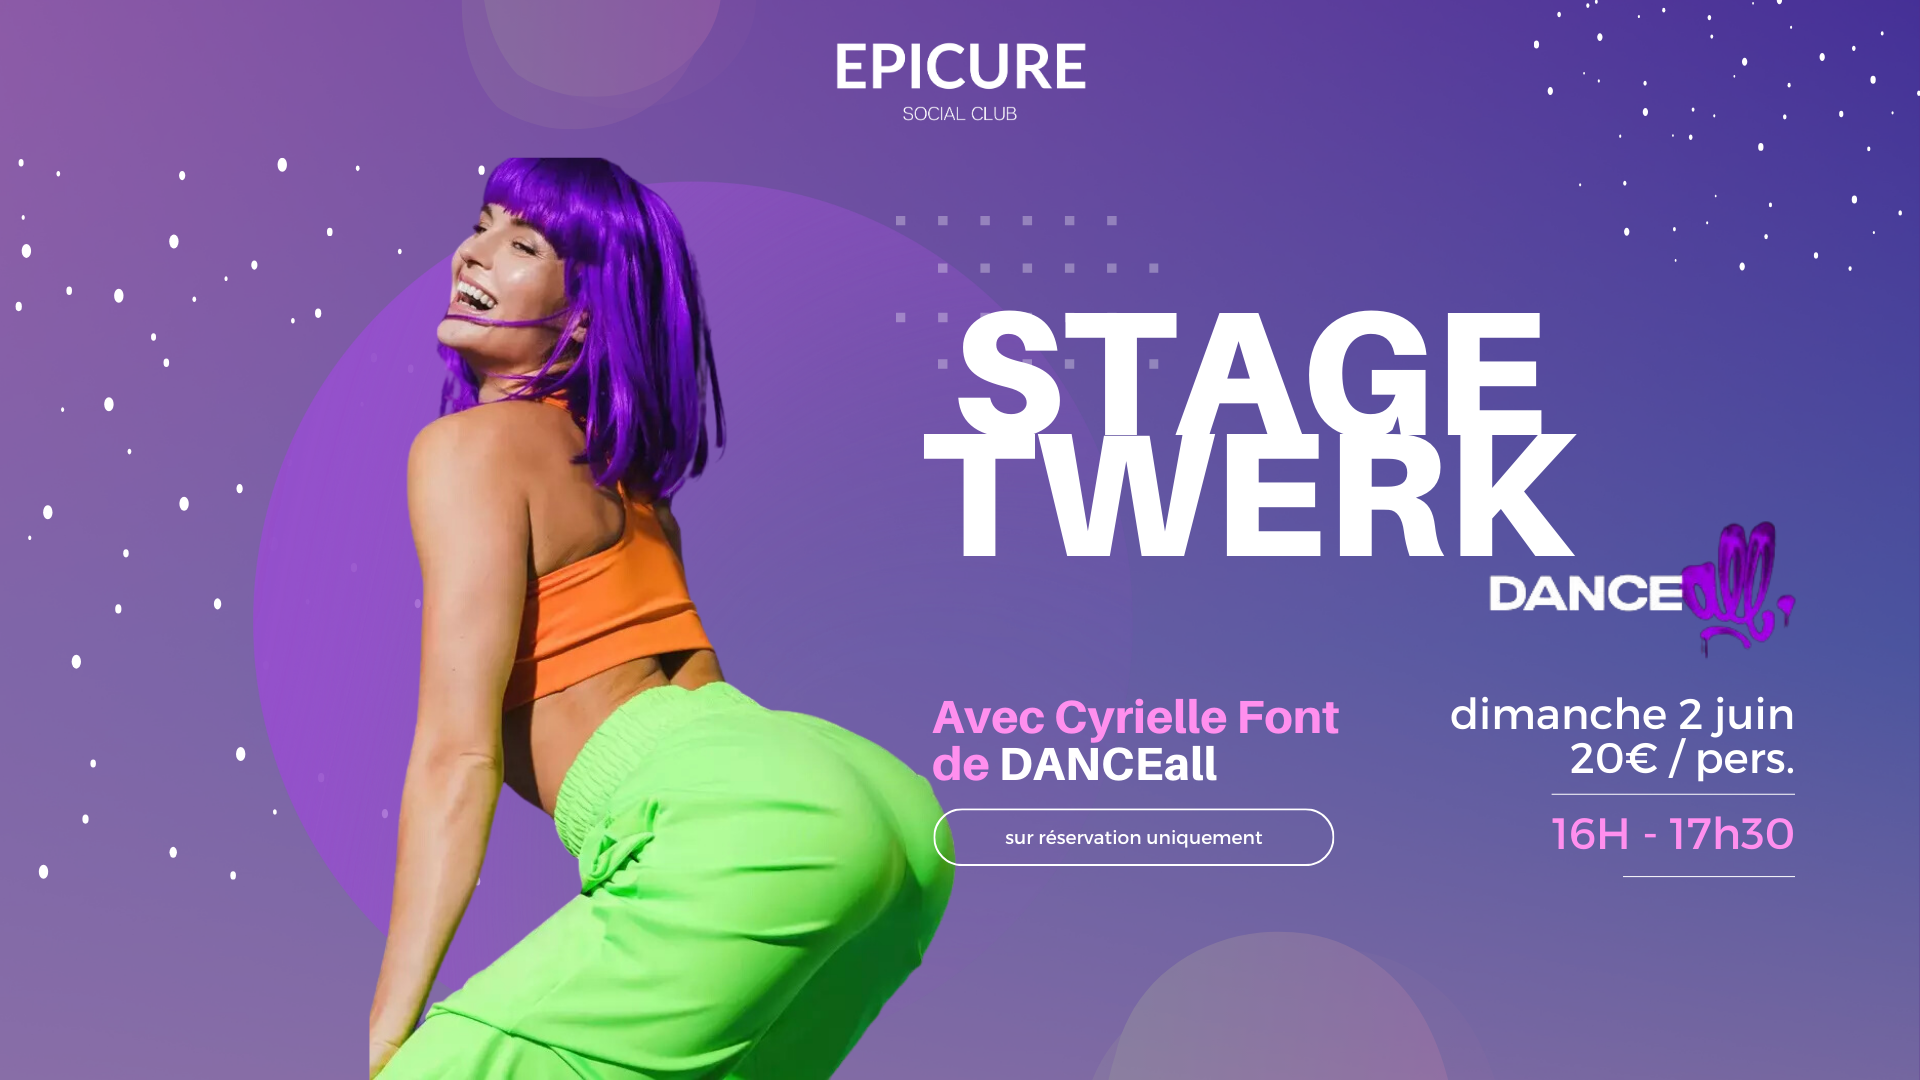 epicure_stage_twerk (1920 x 1080 px)